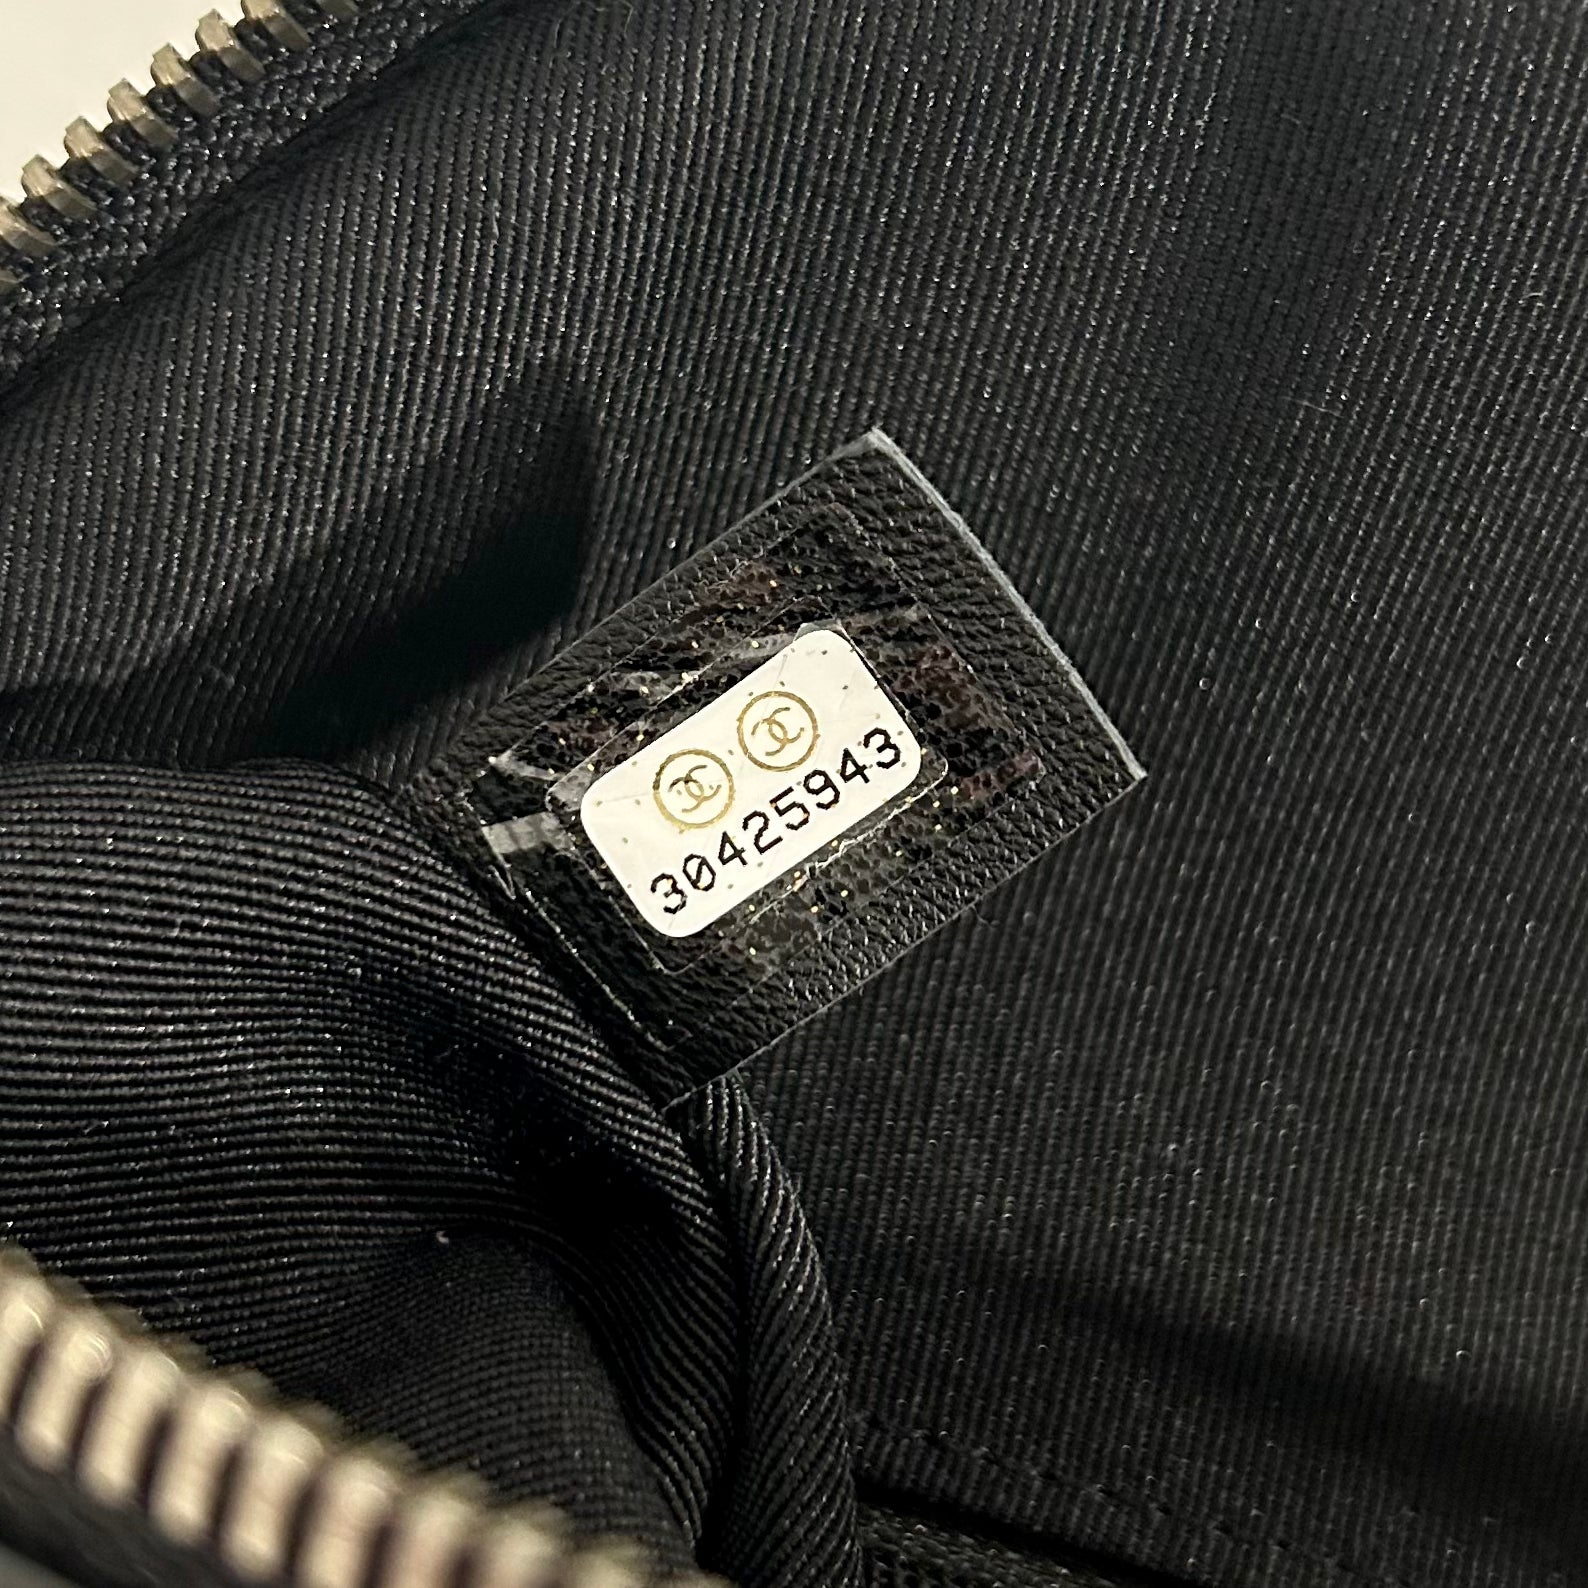 Chanel Written in Chains Belt Bag